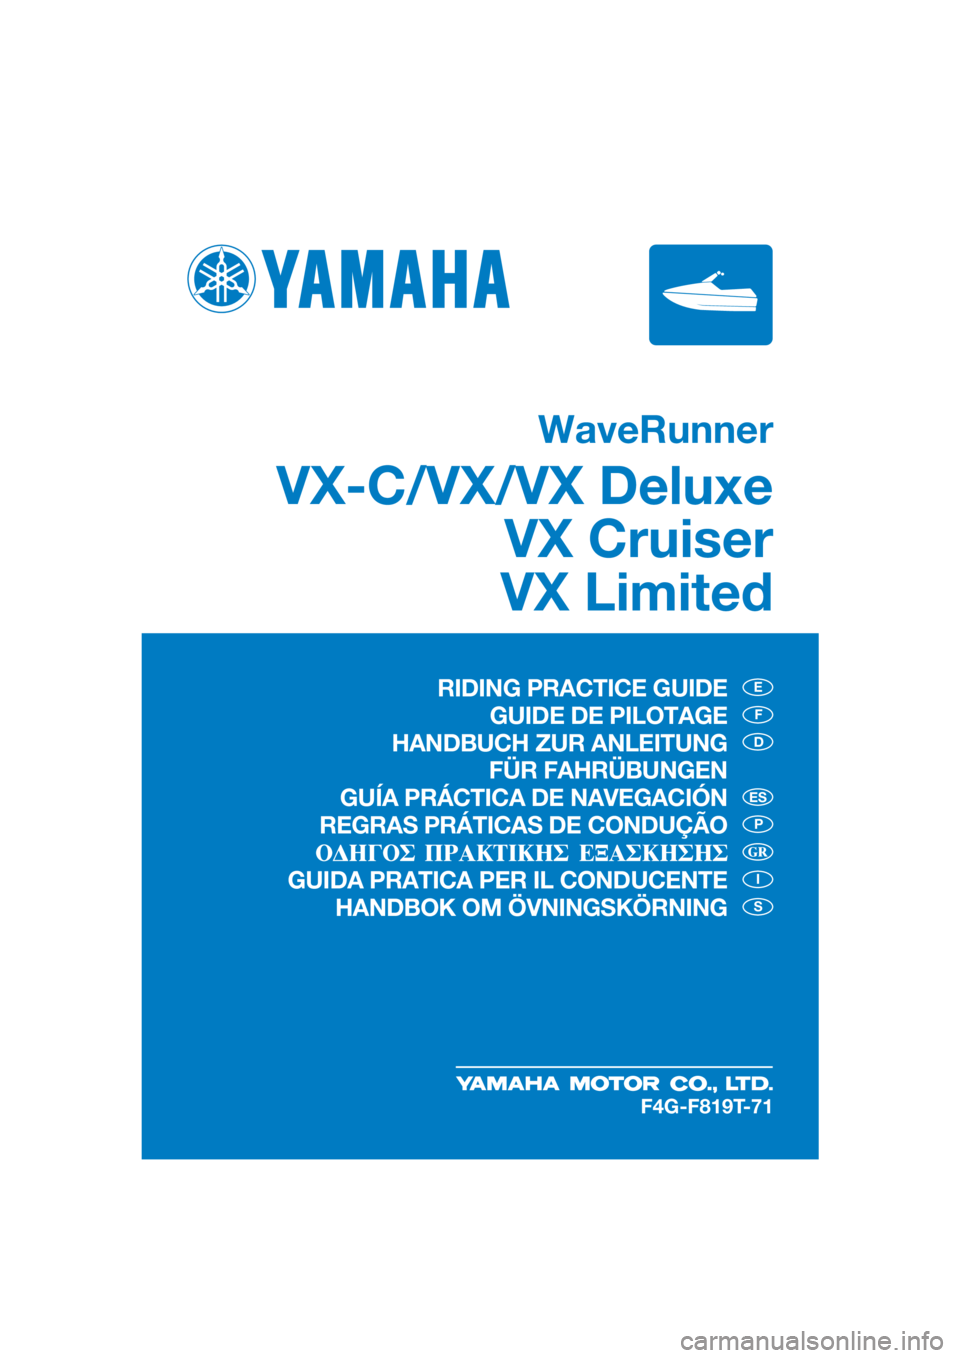 YAMAHA VX DELUXE 2019  Manuale de Empleo (in Spanish) WaveRunner
VX-C/VX/VX Deluxe
VX Cruiser
VX Limited
E
F
D
P
I
S
ES
F4G-F819T-71
RIDING PRACTICE GUIDE
GUIDE DE PILOTAGE
HANDBUCH ZUR ANLEITUNG
 FÜR FAHRÜBUNGEN
GUÍA PRÁCTICA DE NAVEGACIÓN
REGRAS P